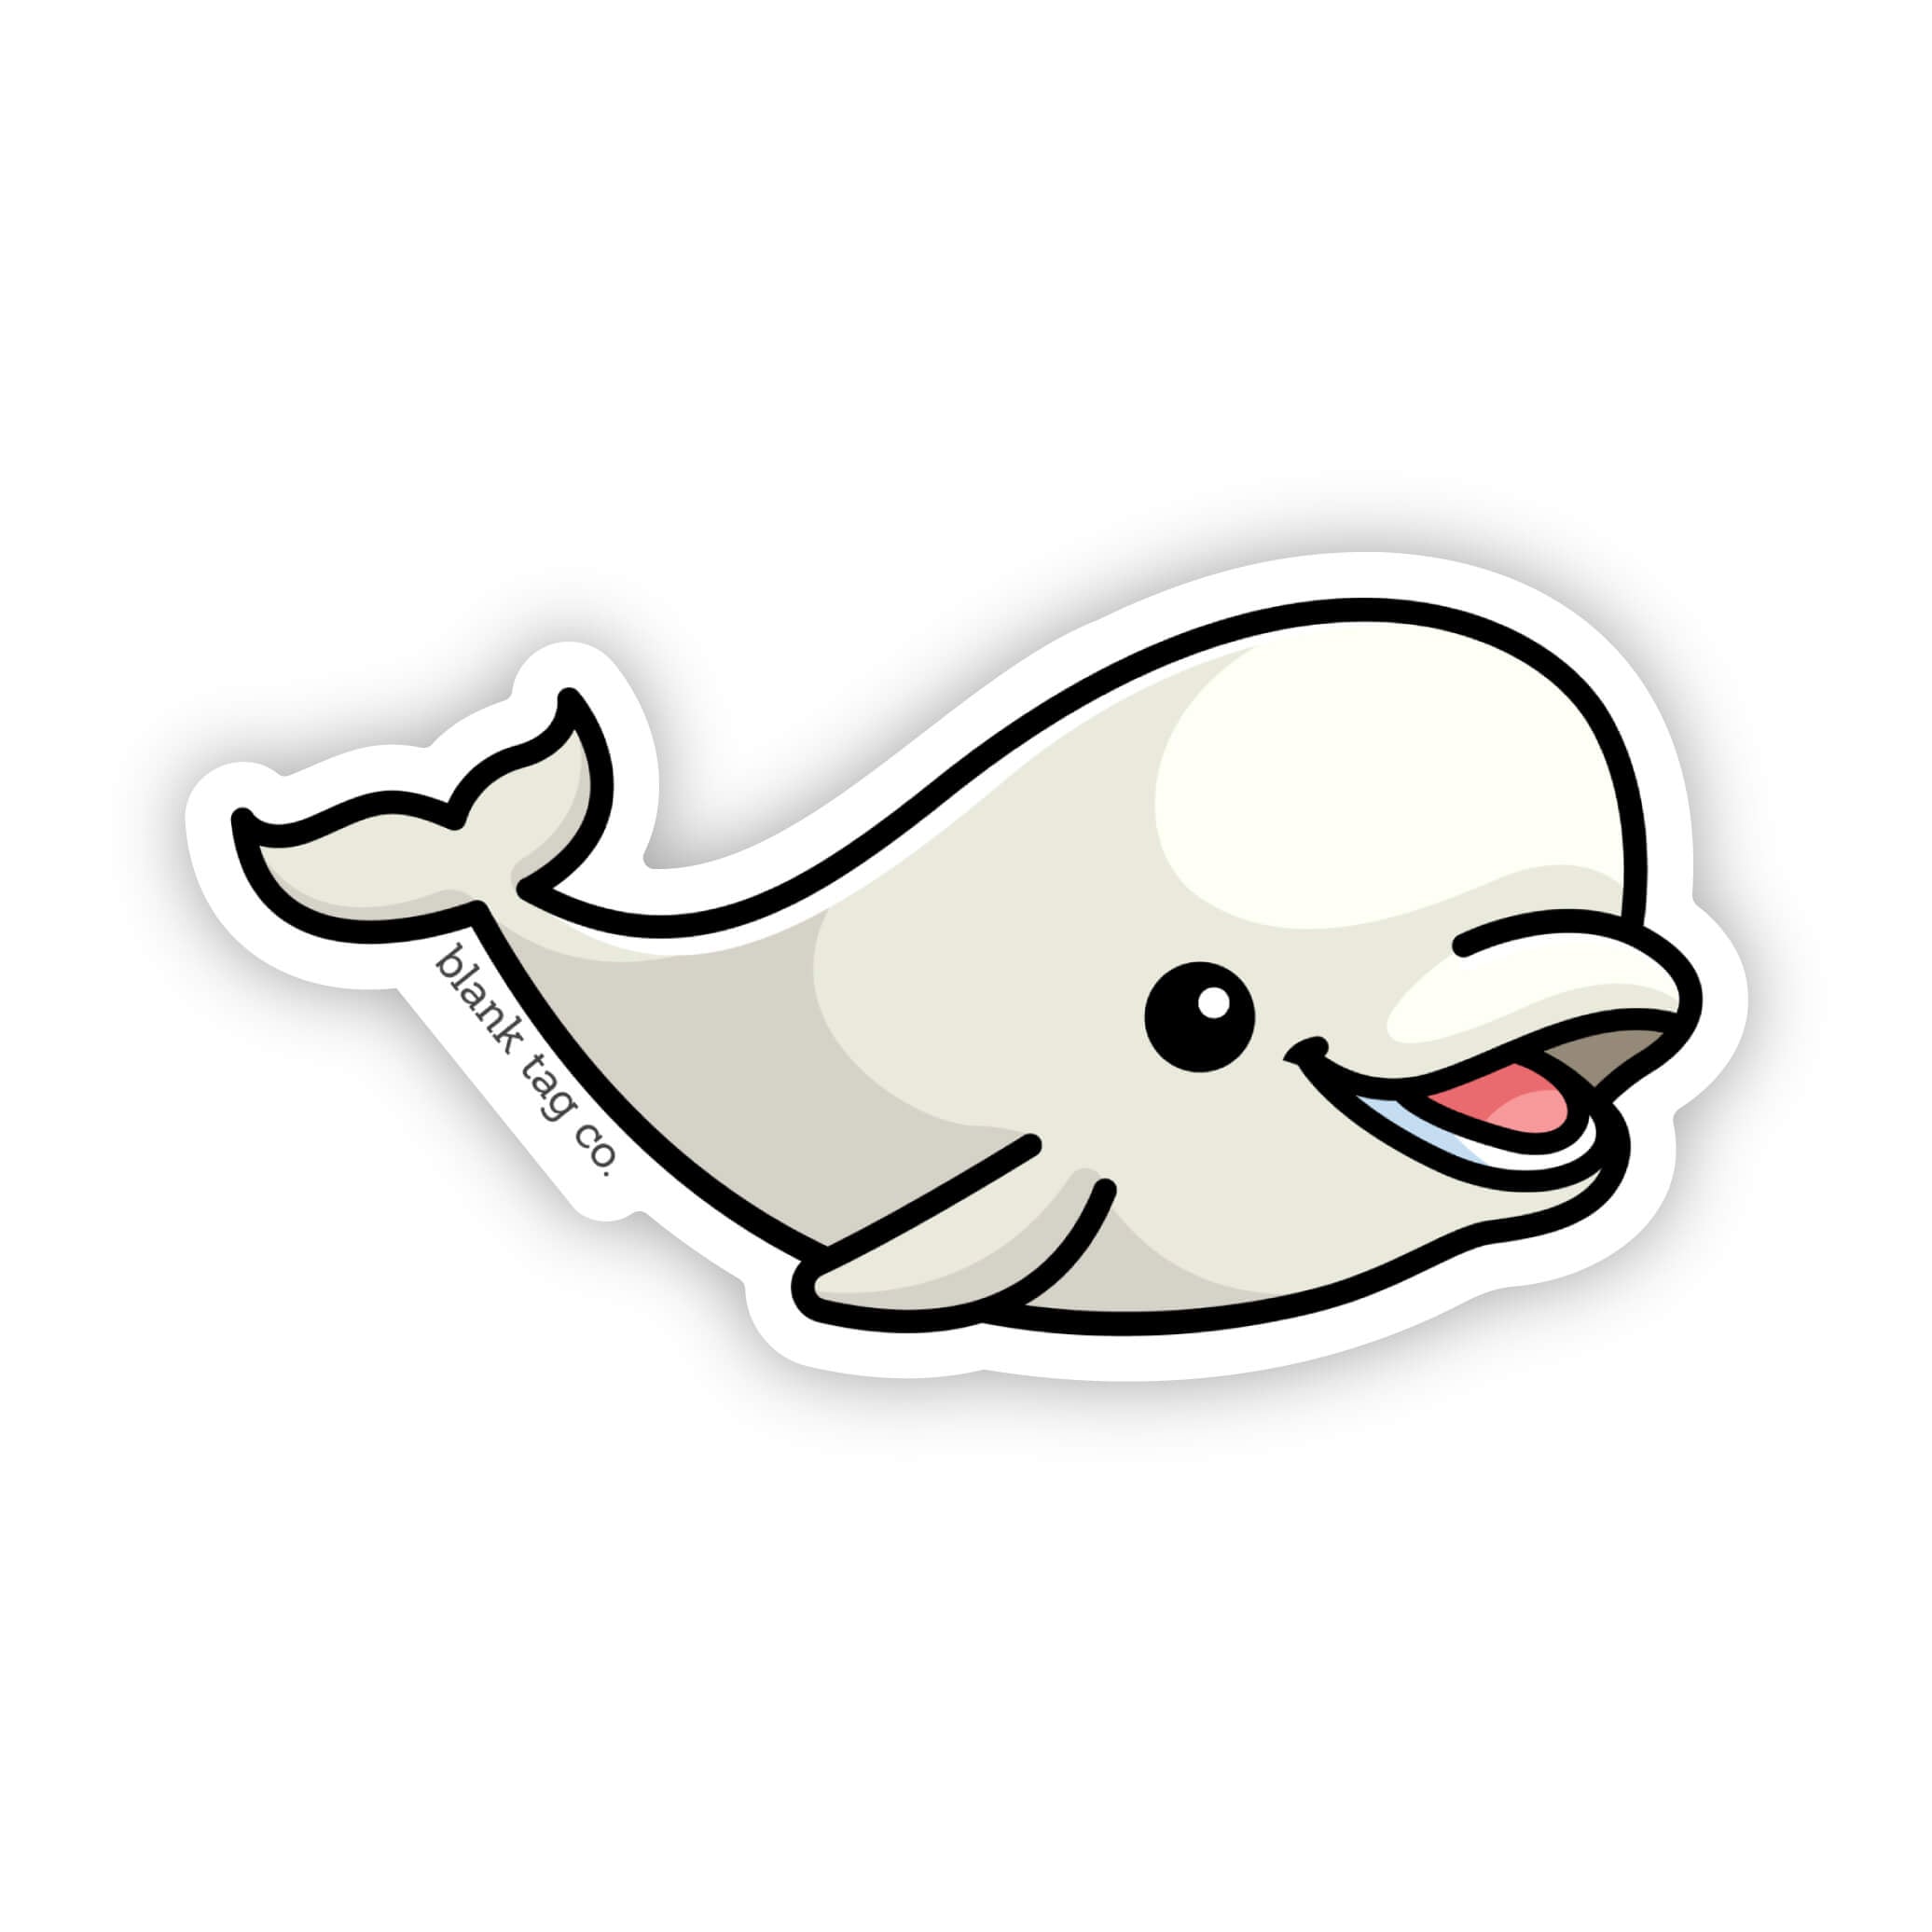 The Beluga Whale Sticker